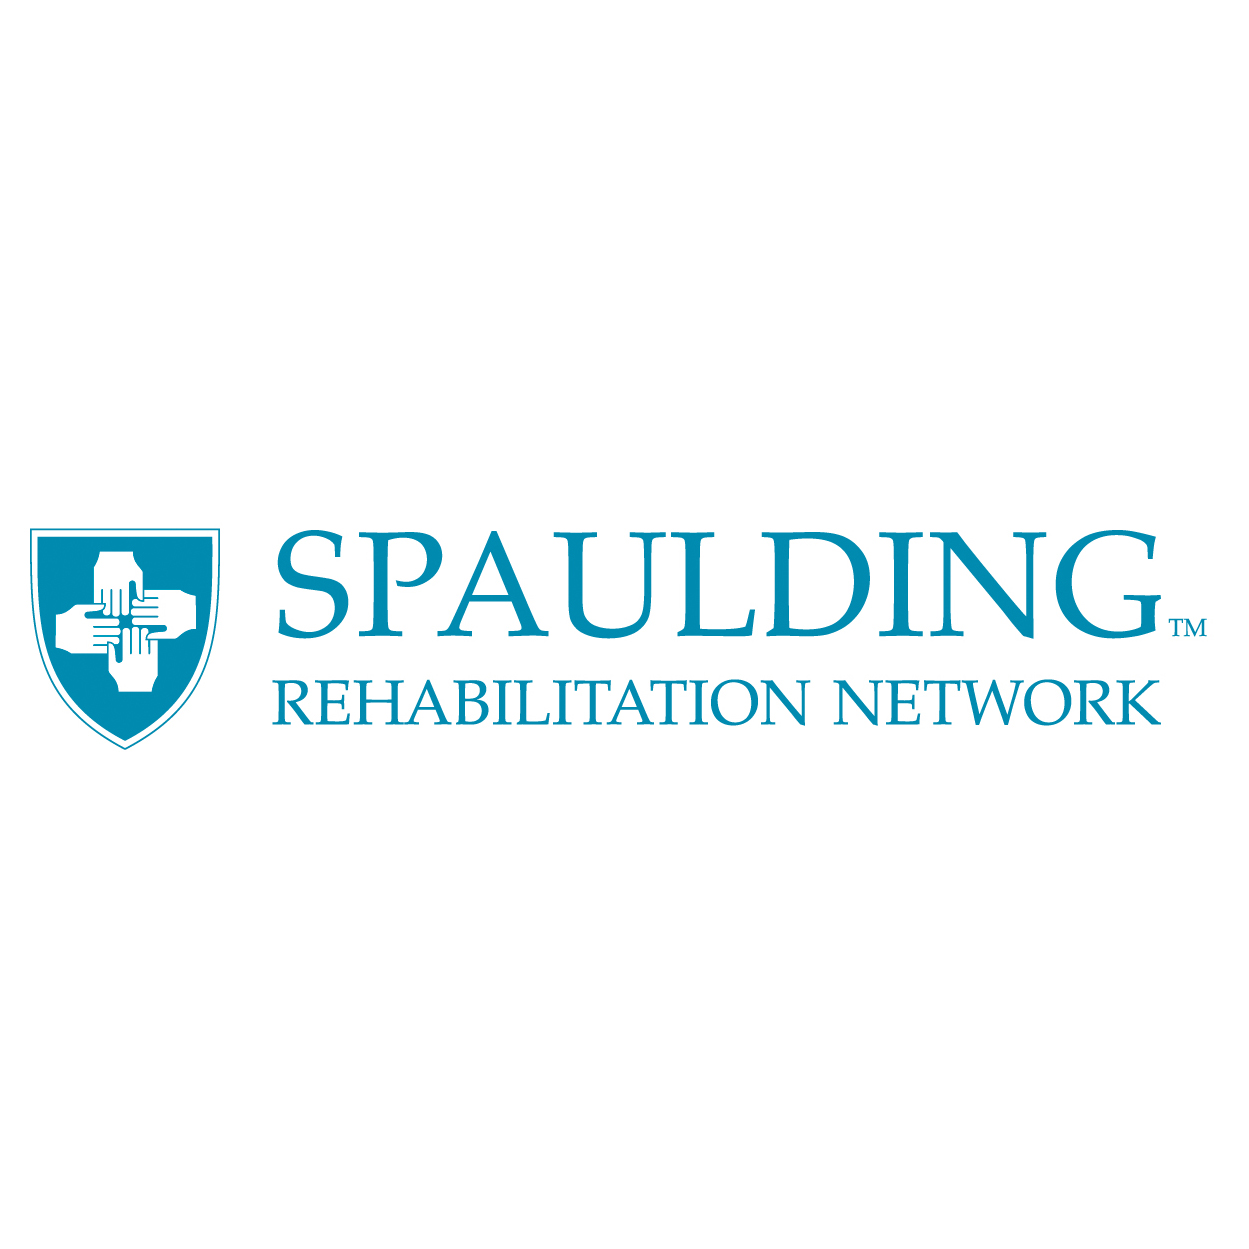 Spaulding Rehabilitation